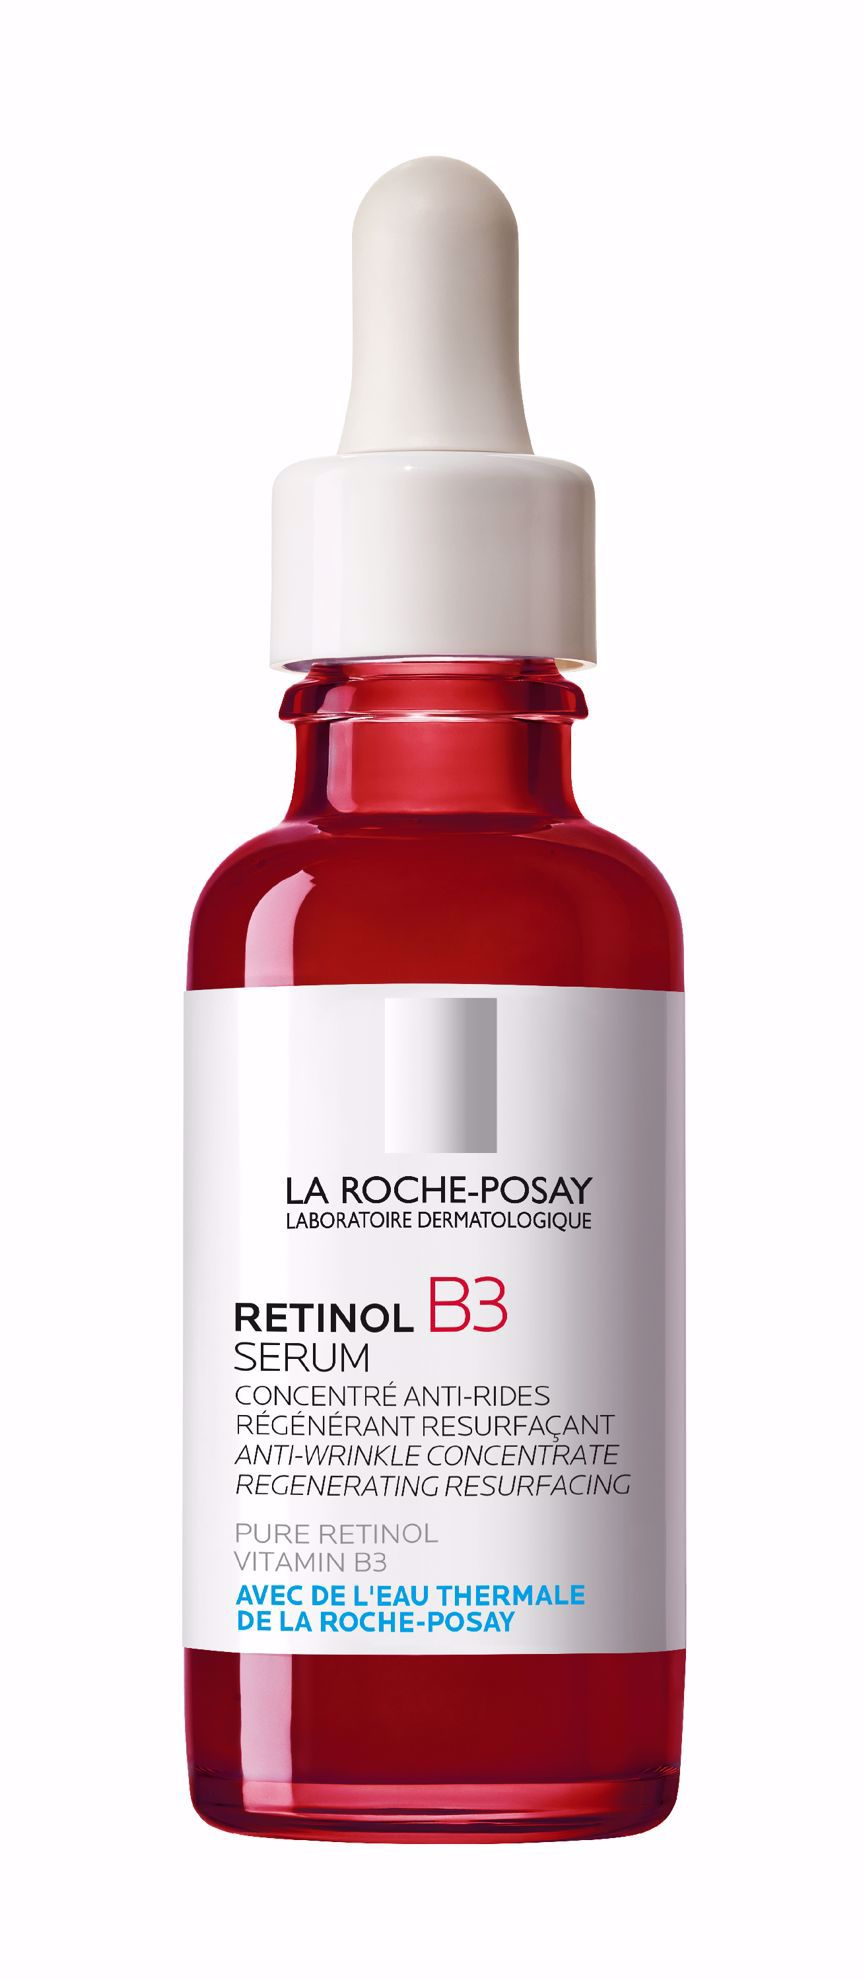 La Roche-Posay 0.3% Retinol + Vitamin B3 Serum 30ml